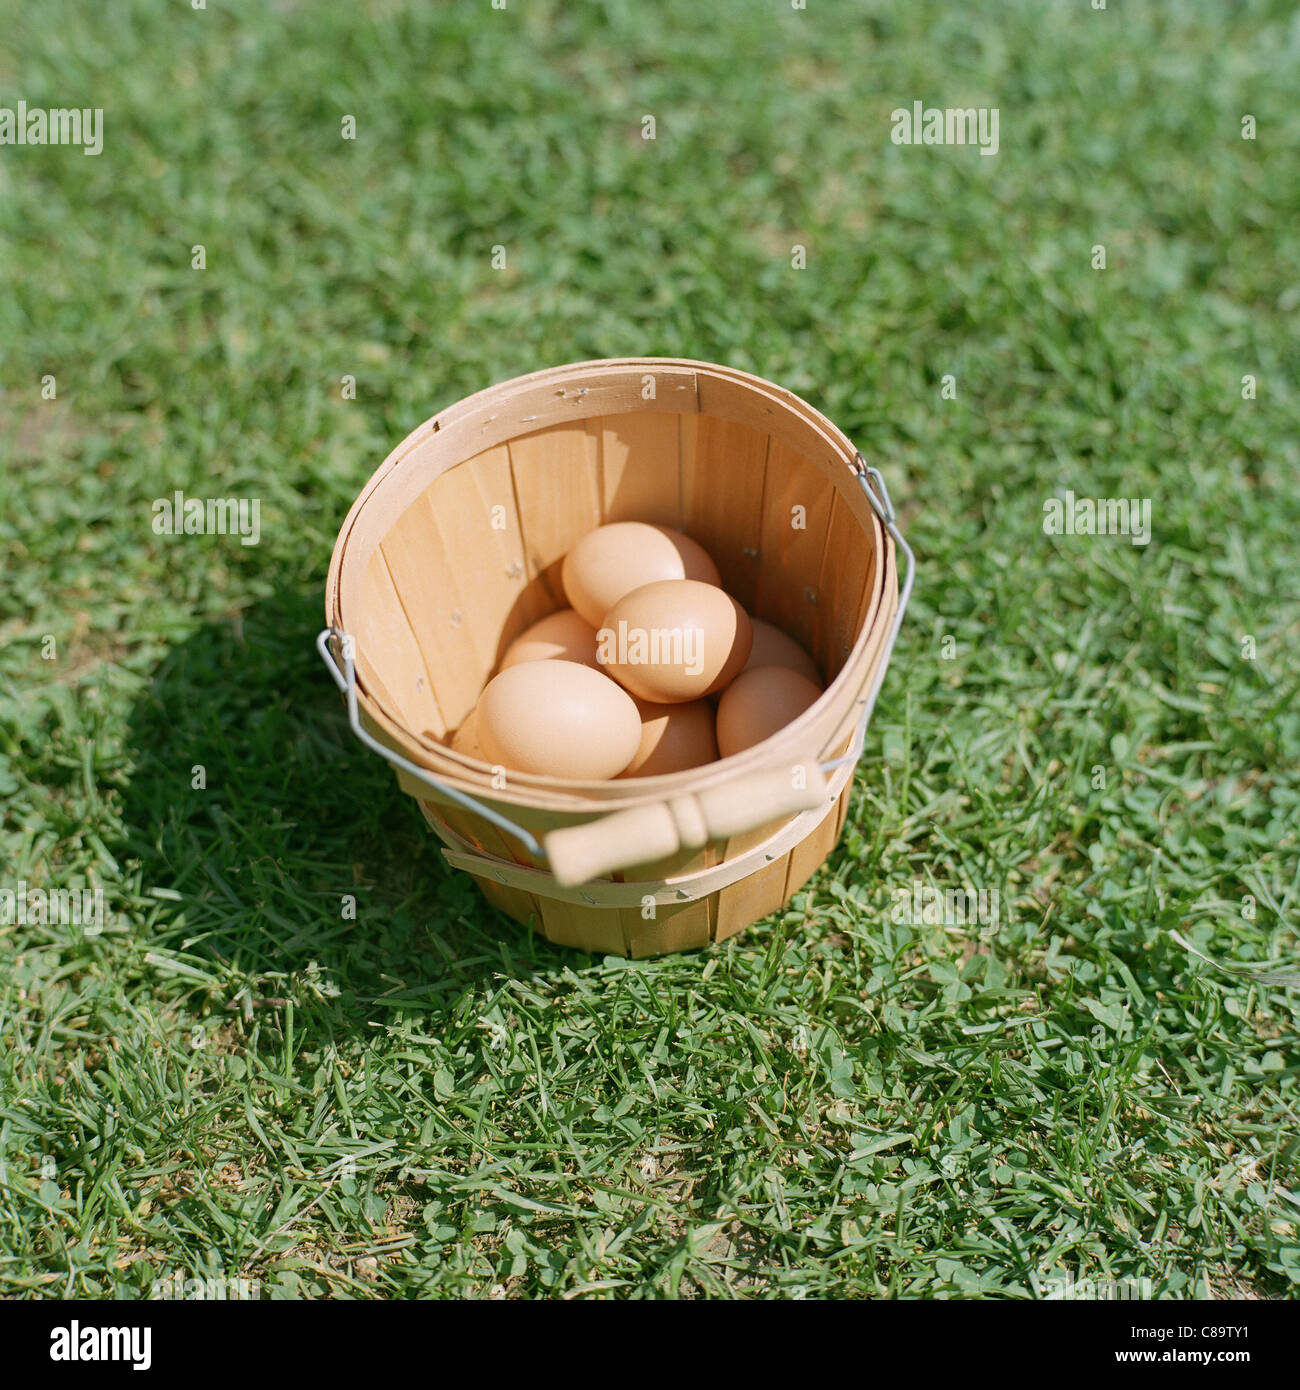 Eiern in einem Korb Stockfoto